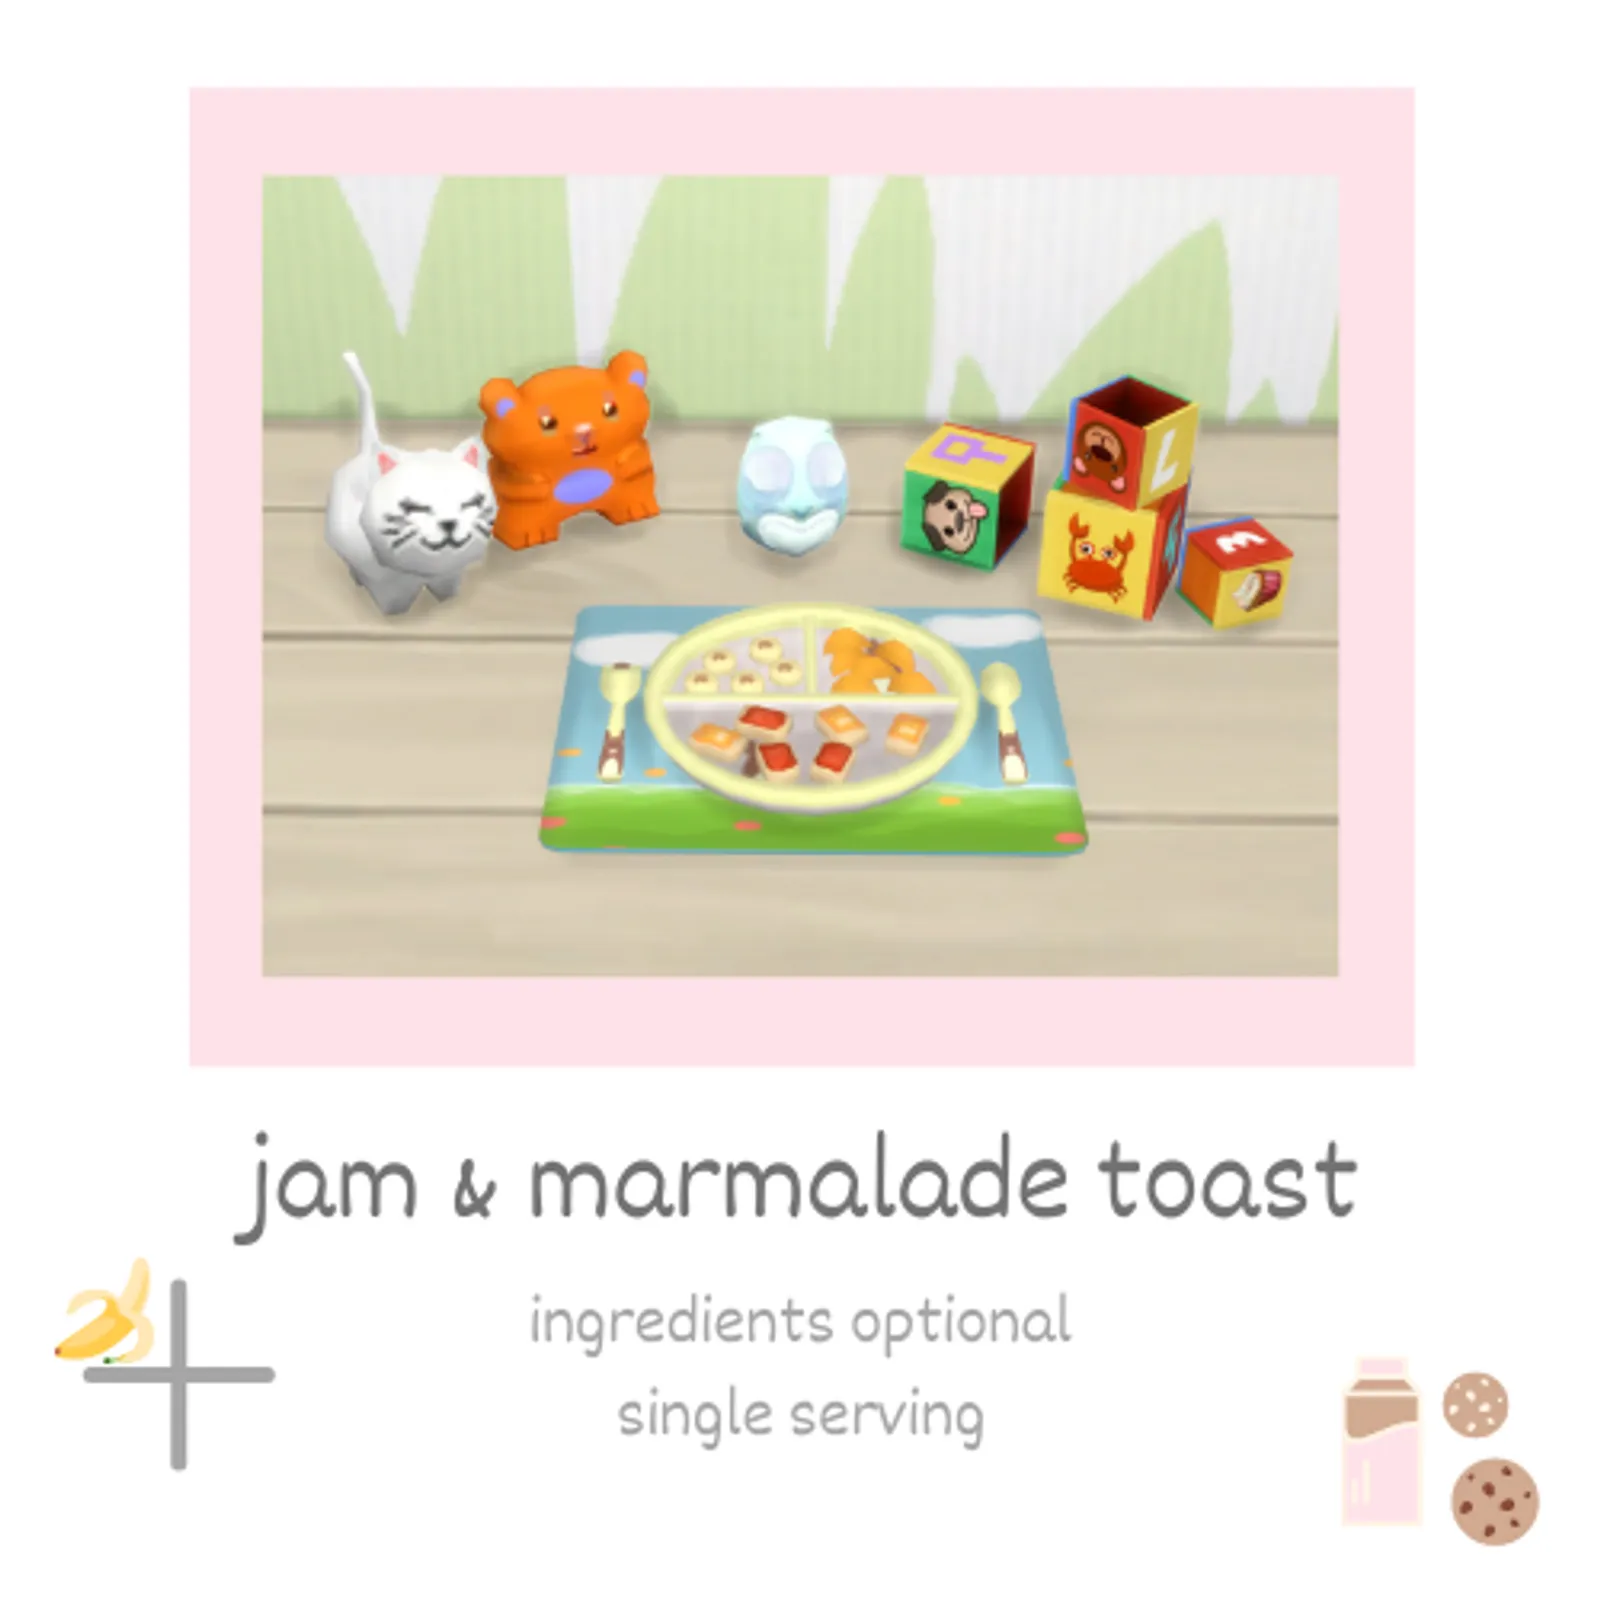 jam & marmalade toast